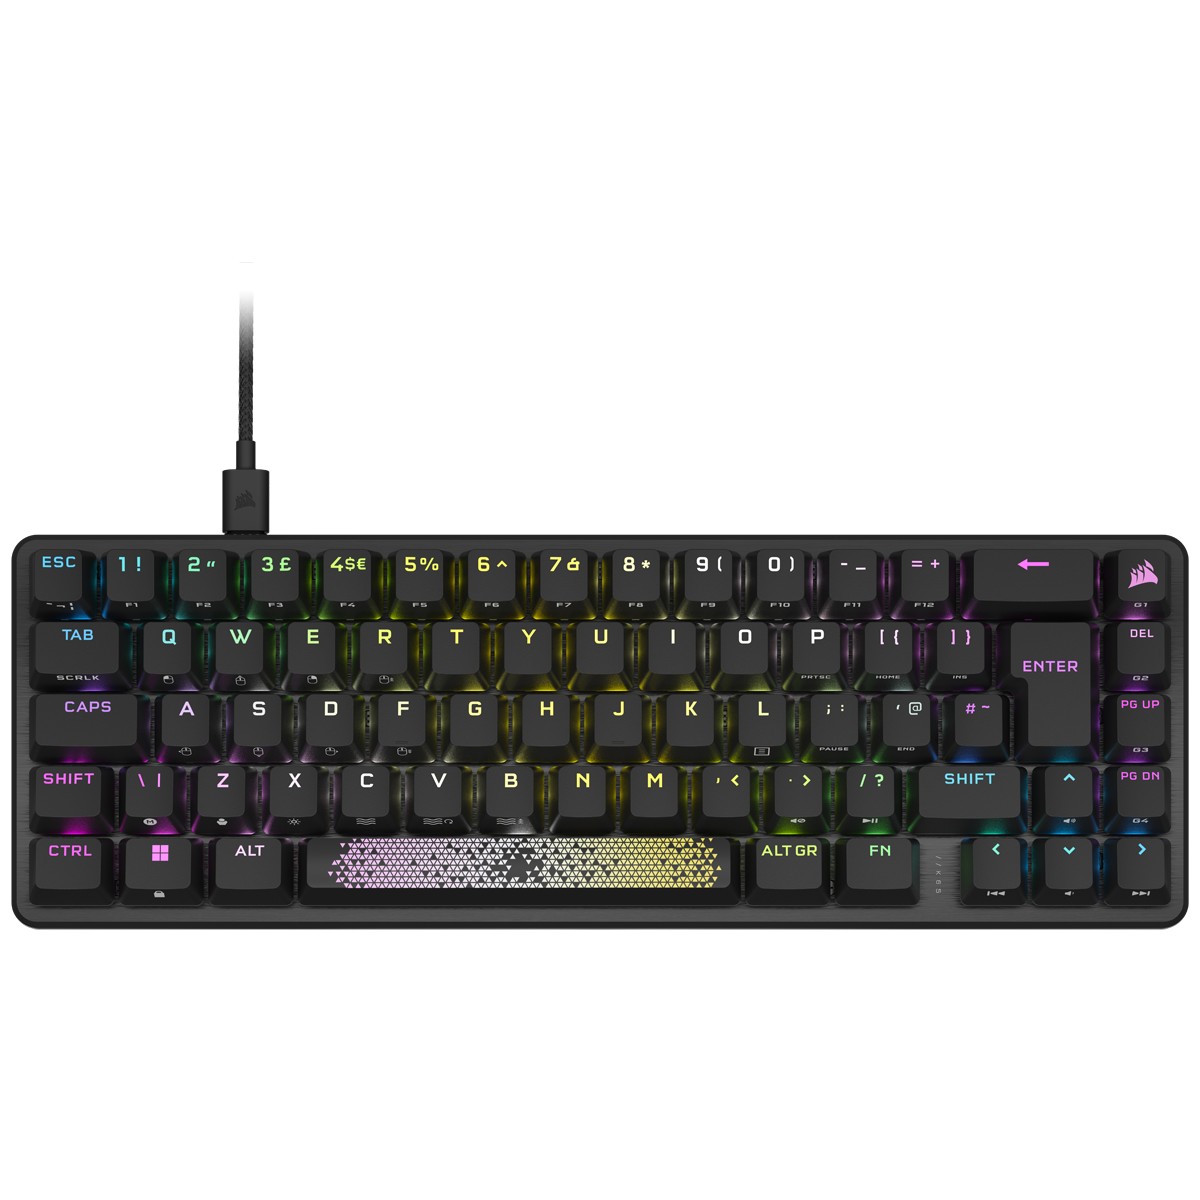 Corsair K65 RGB Mini Gaming Keyboard Review, by Alex Rowe